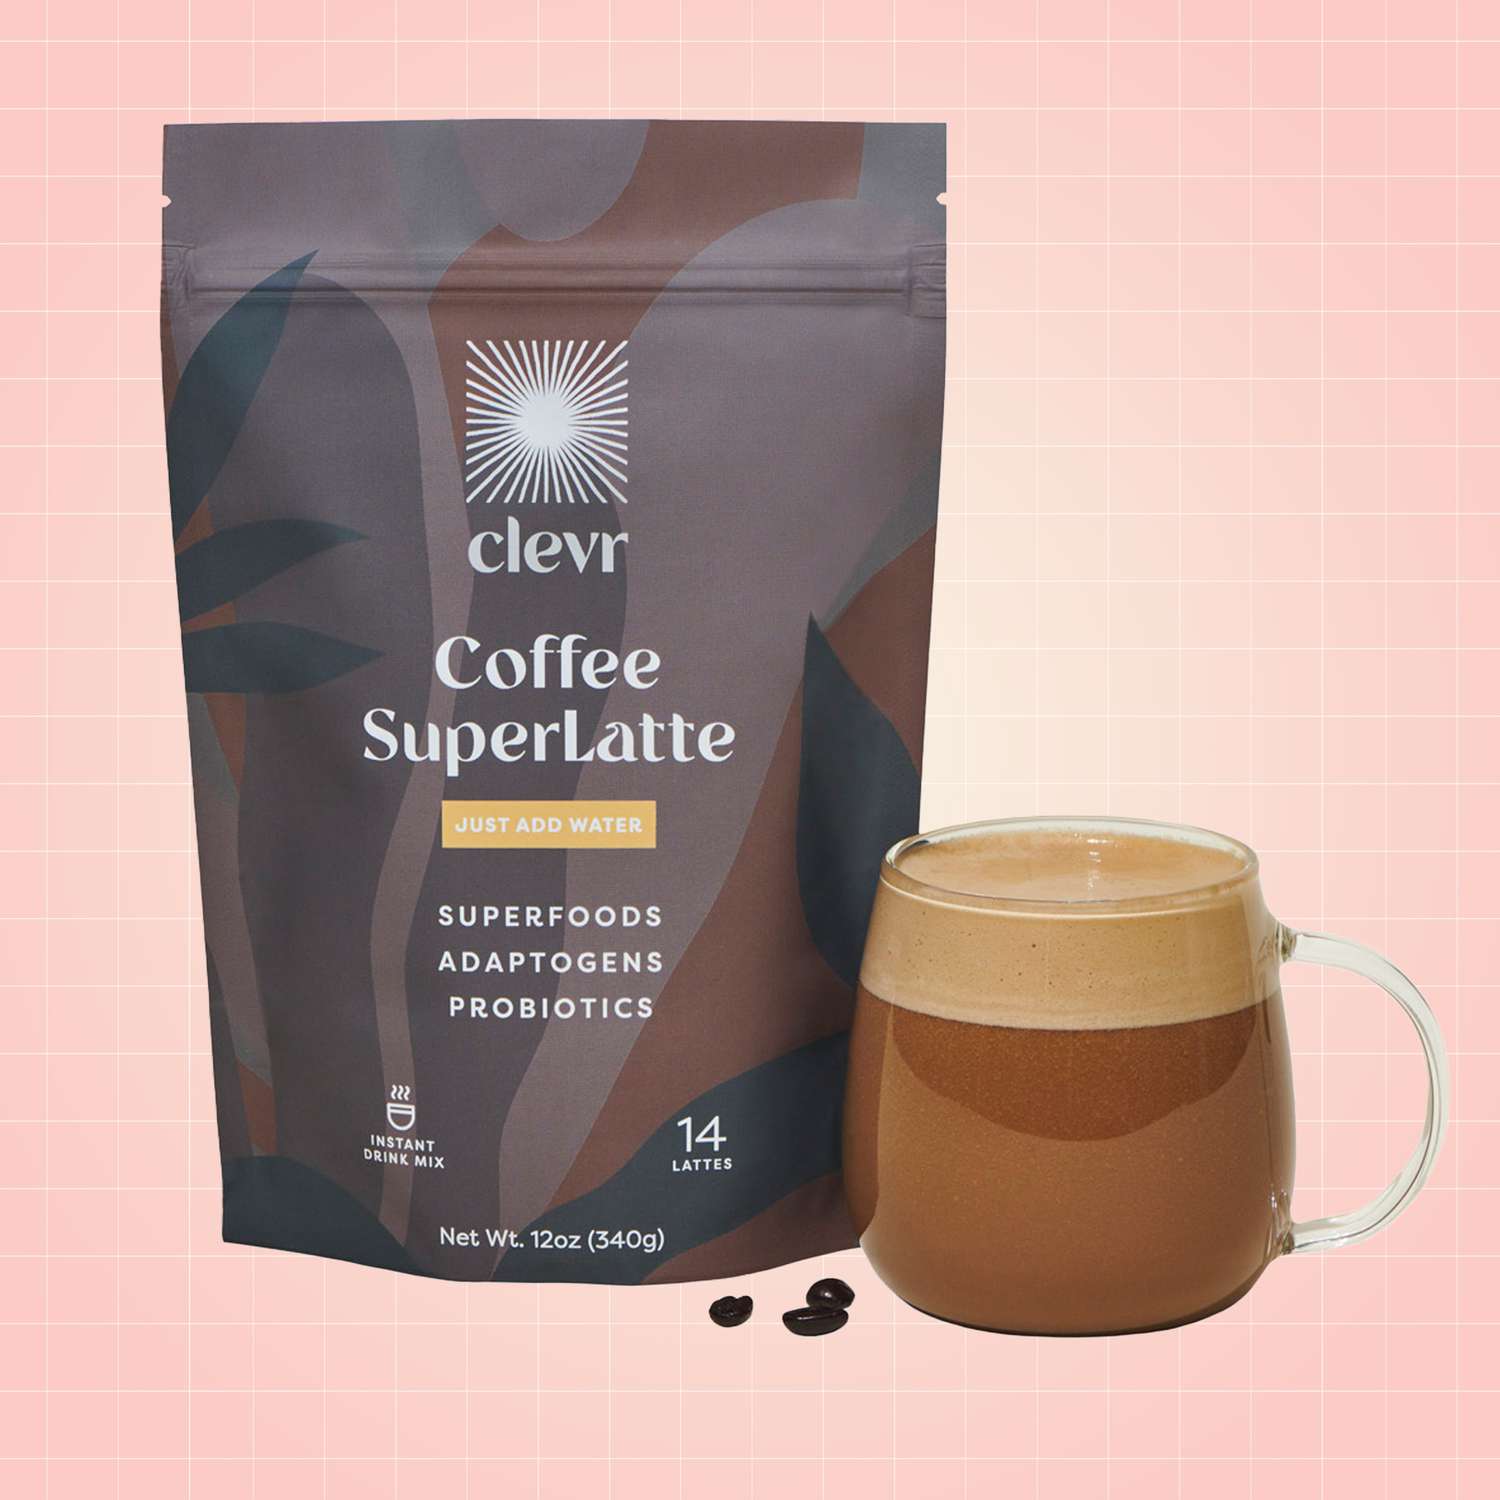 Clevr Coffee Super Latte